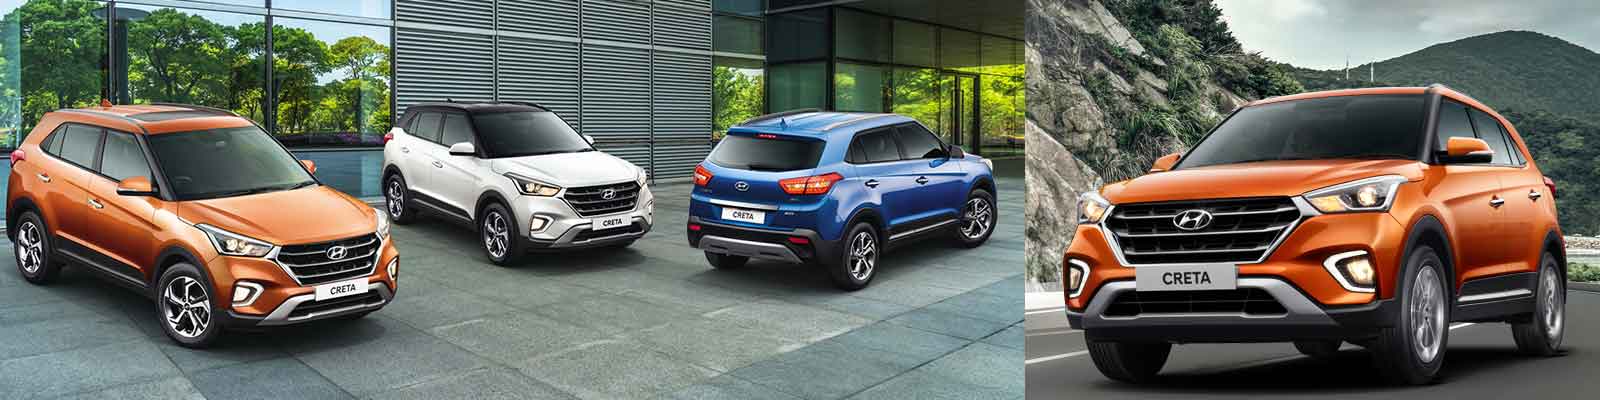 Hyundai Creta India Price 2019 Compare Hyundai Creta 2020 Vs Kia